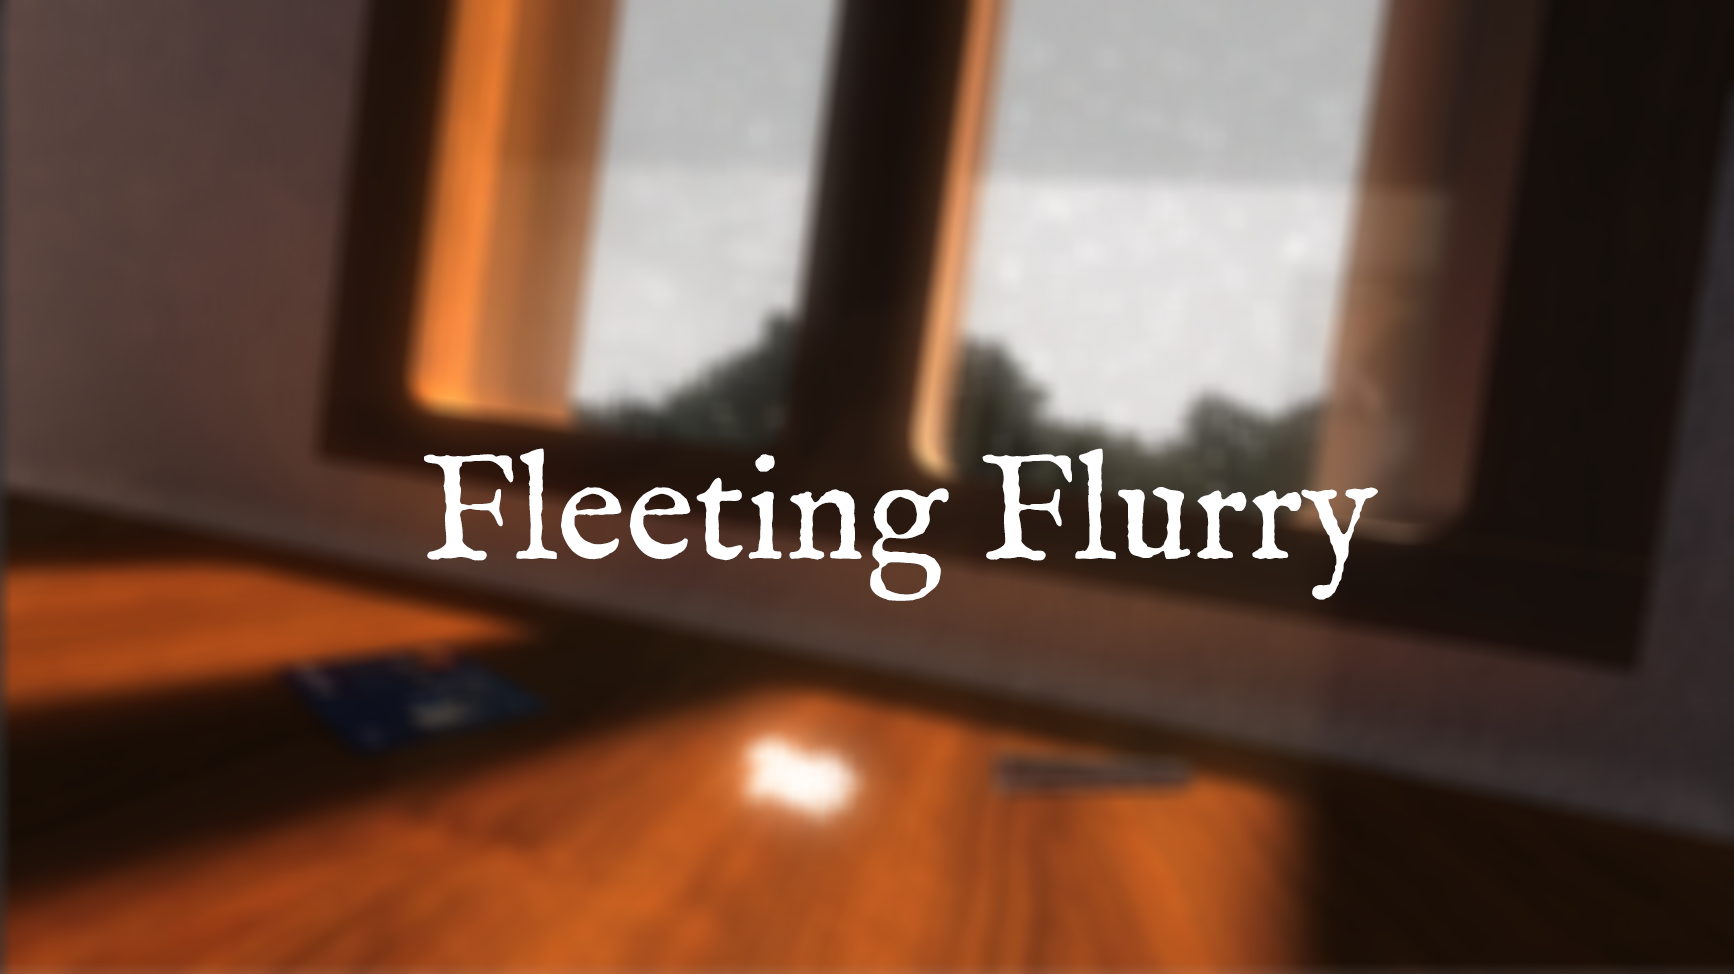 Fleeting Flurry Mac OS